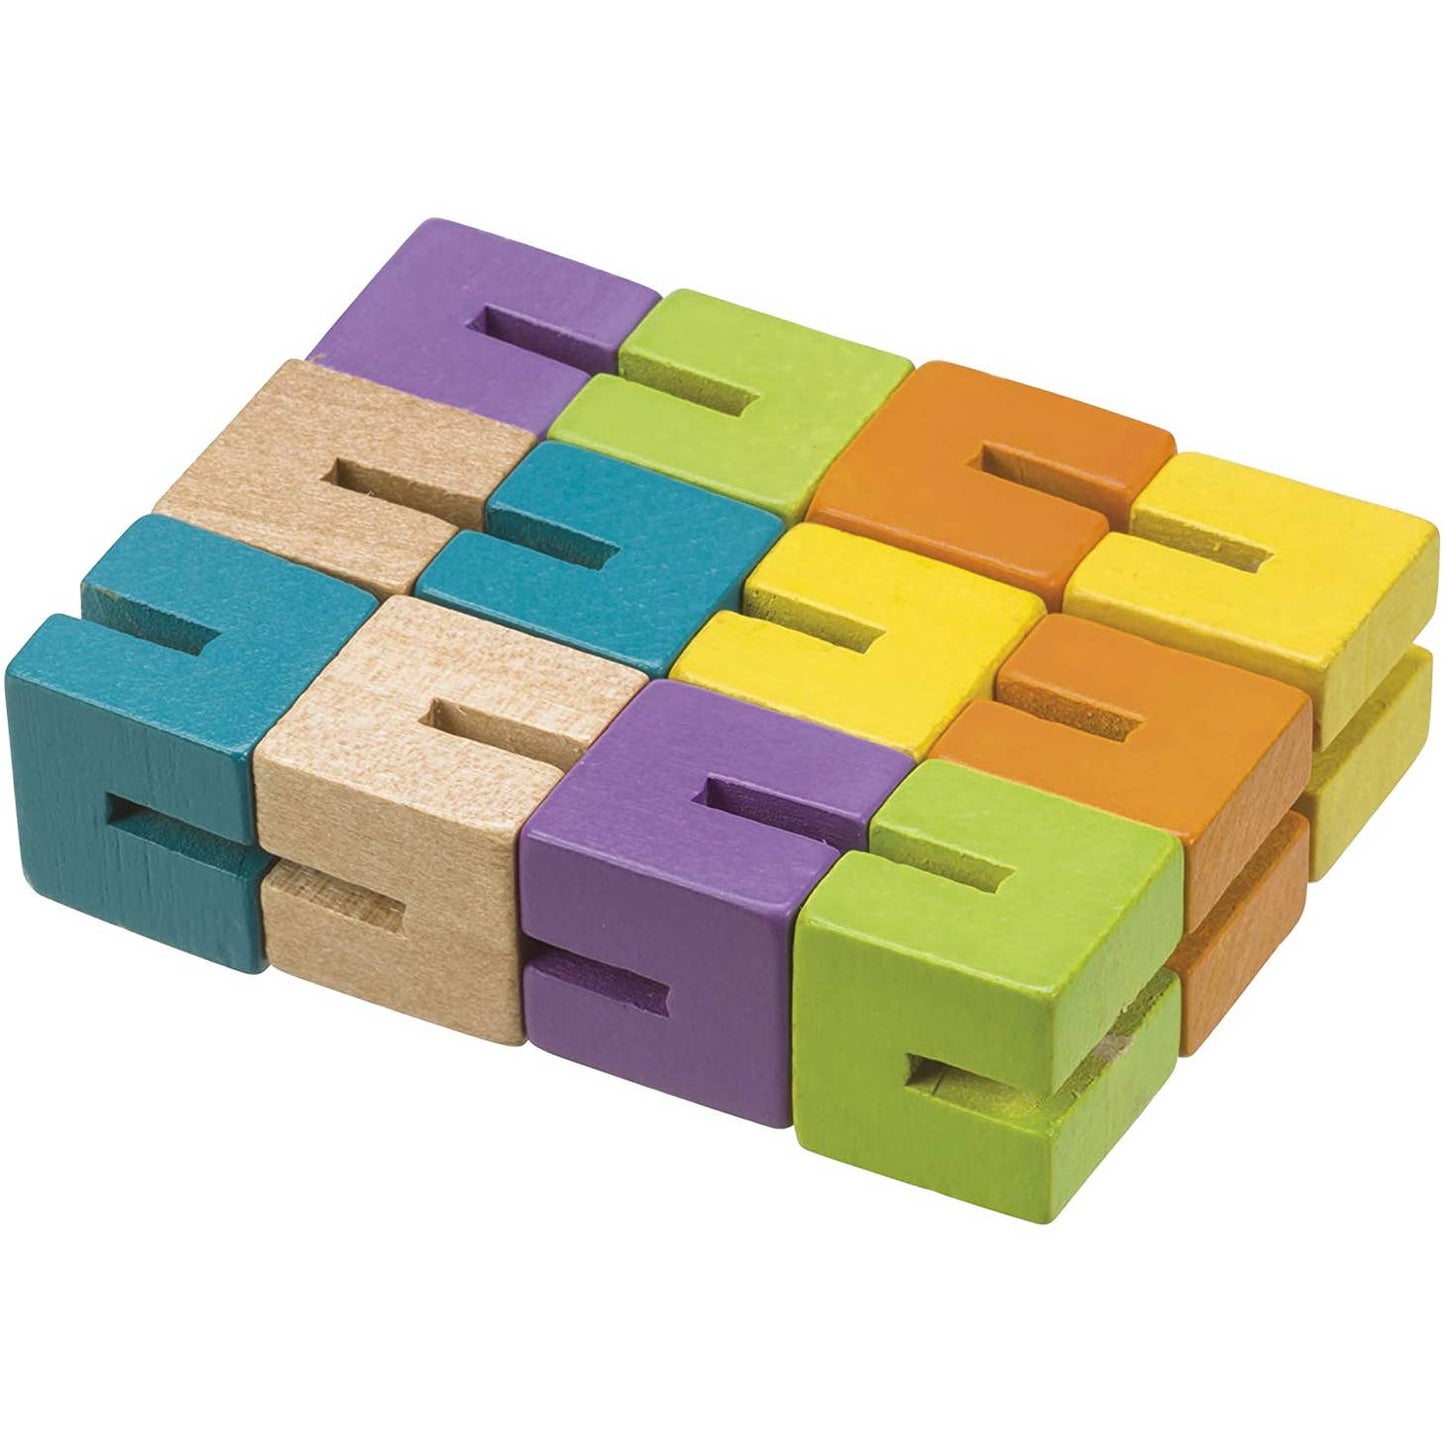 Toysmith Wooden Fidget Puzzle